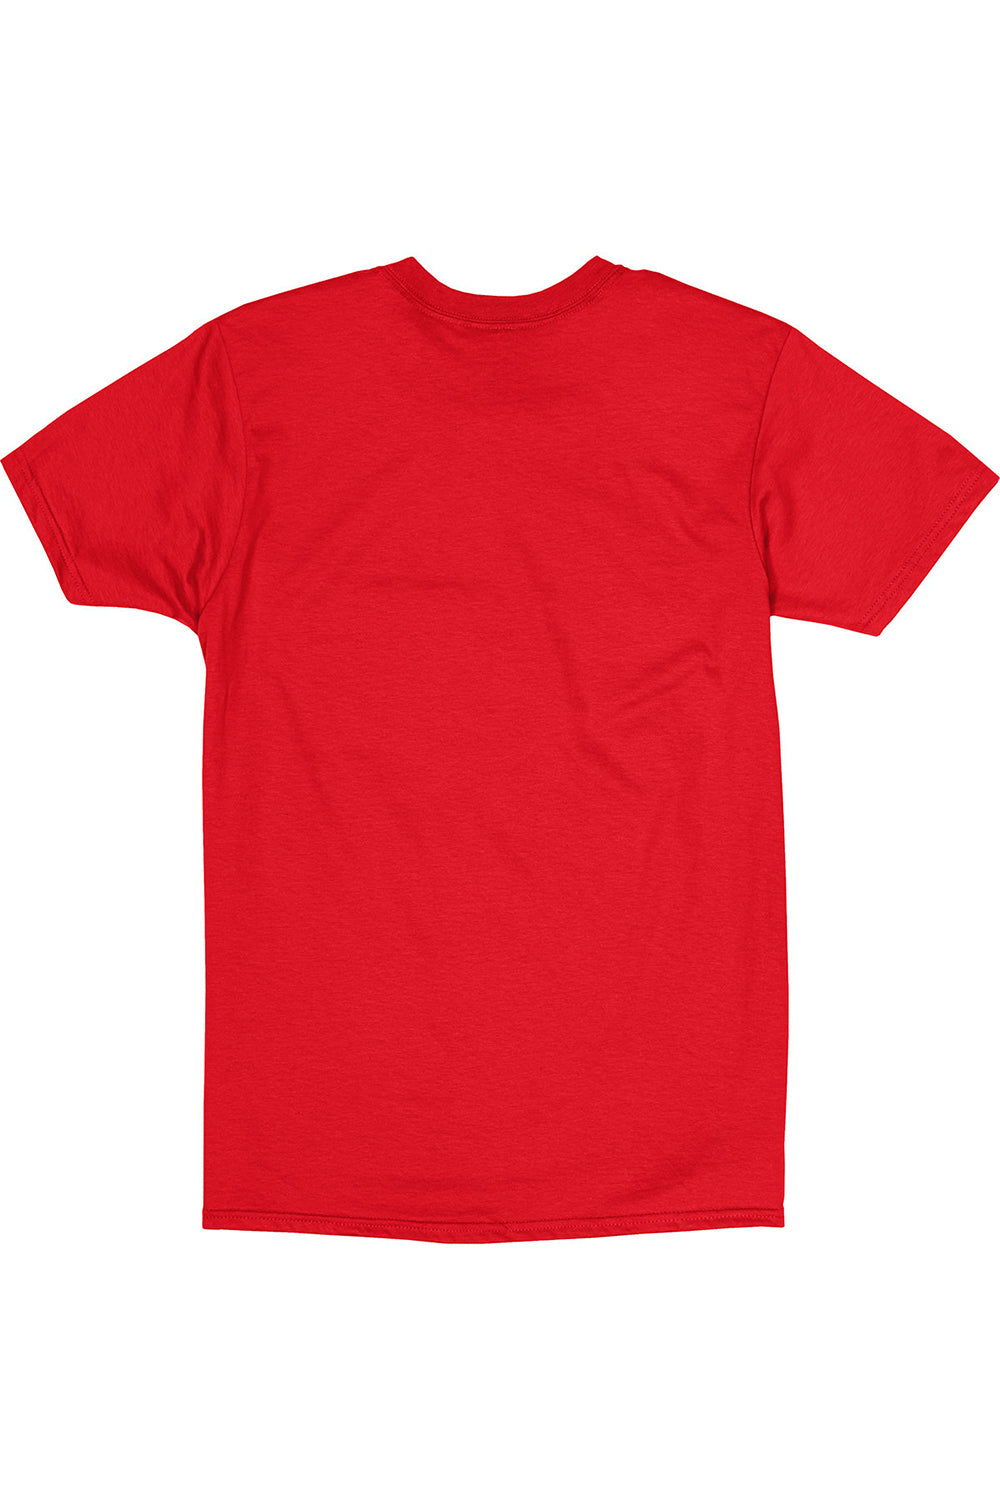 Hanes 4980 Mens Nano-T Short Sleeve Crewneck T-Shirt Athletic Red Flat Back